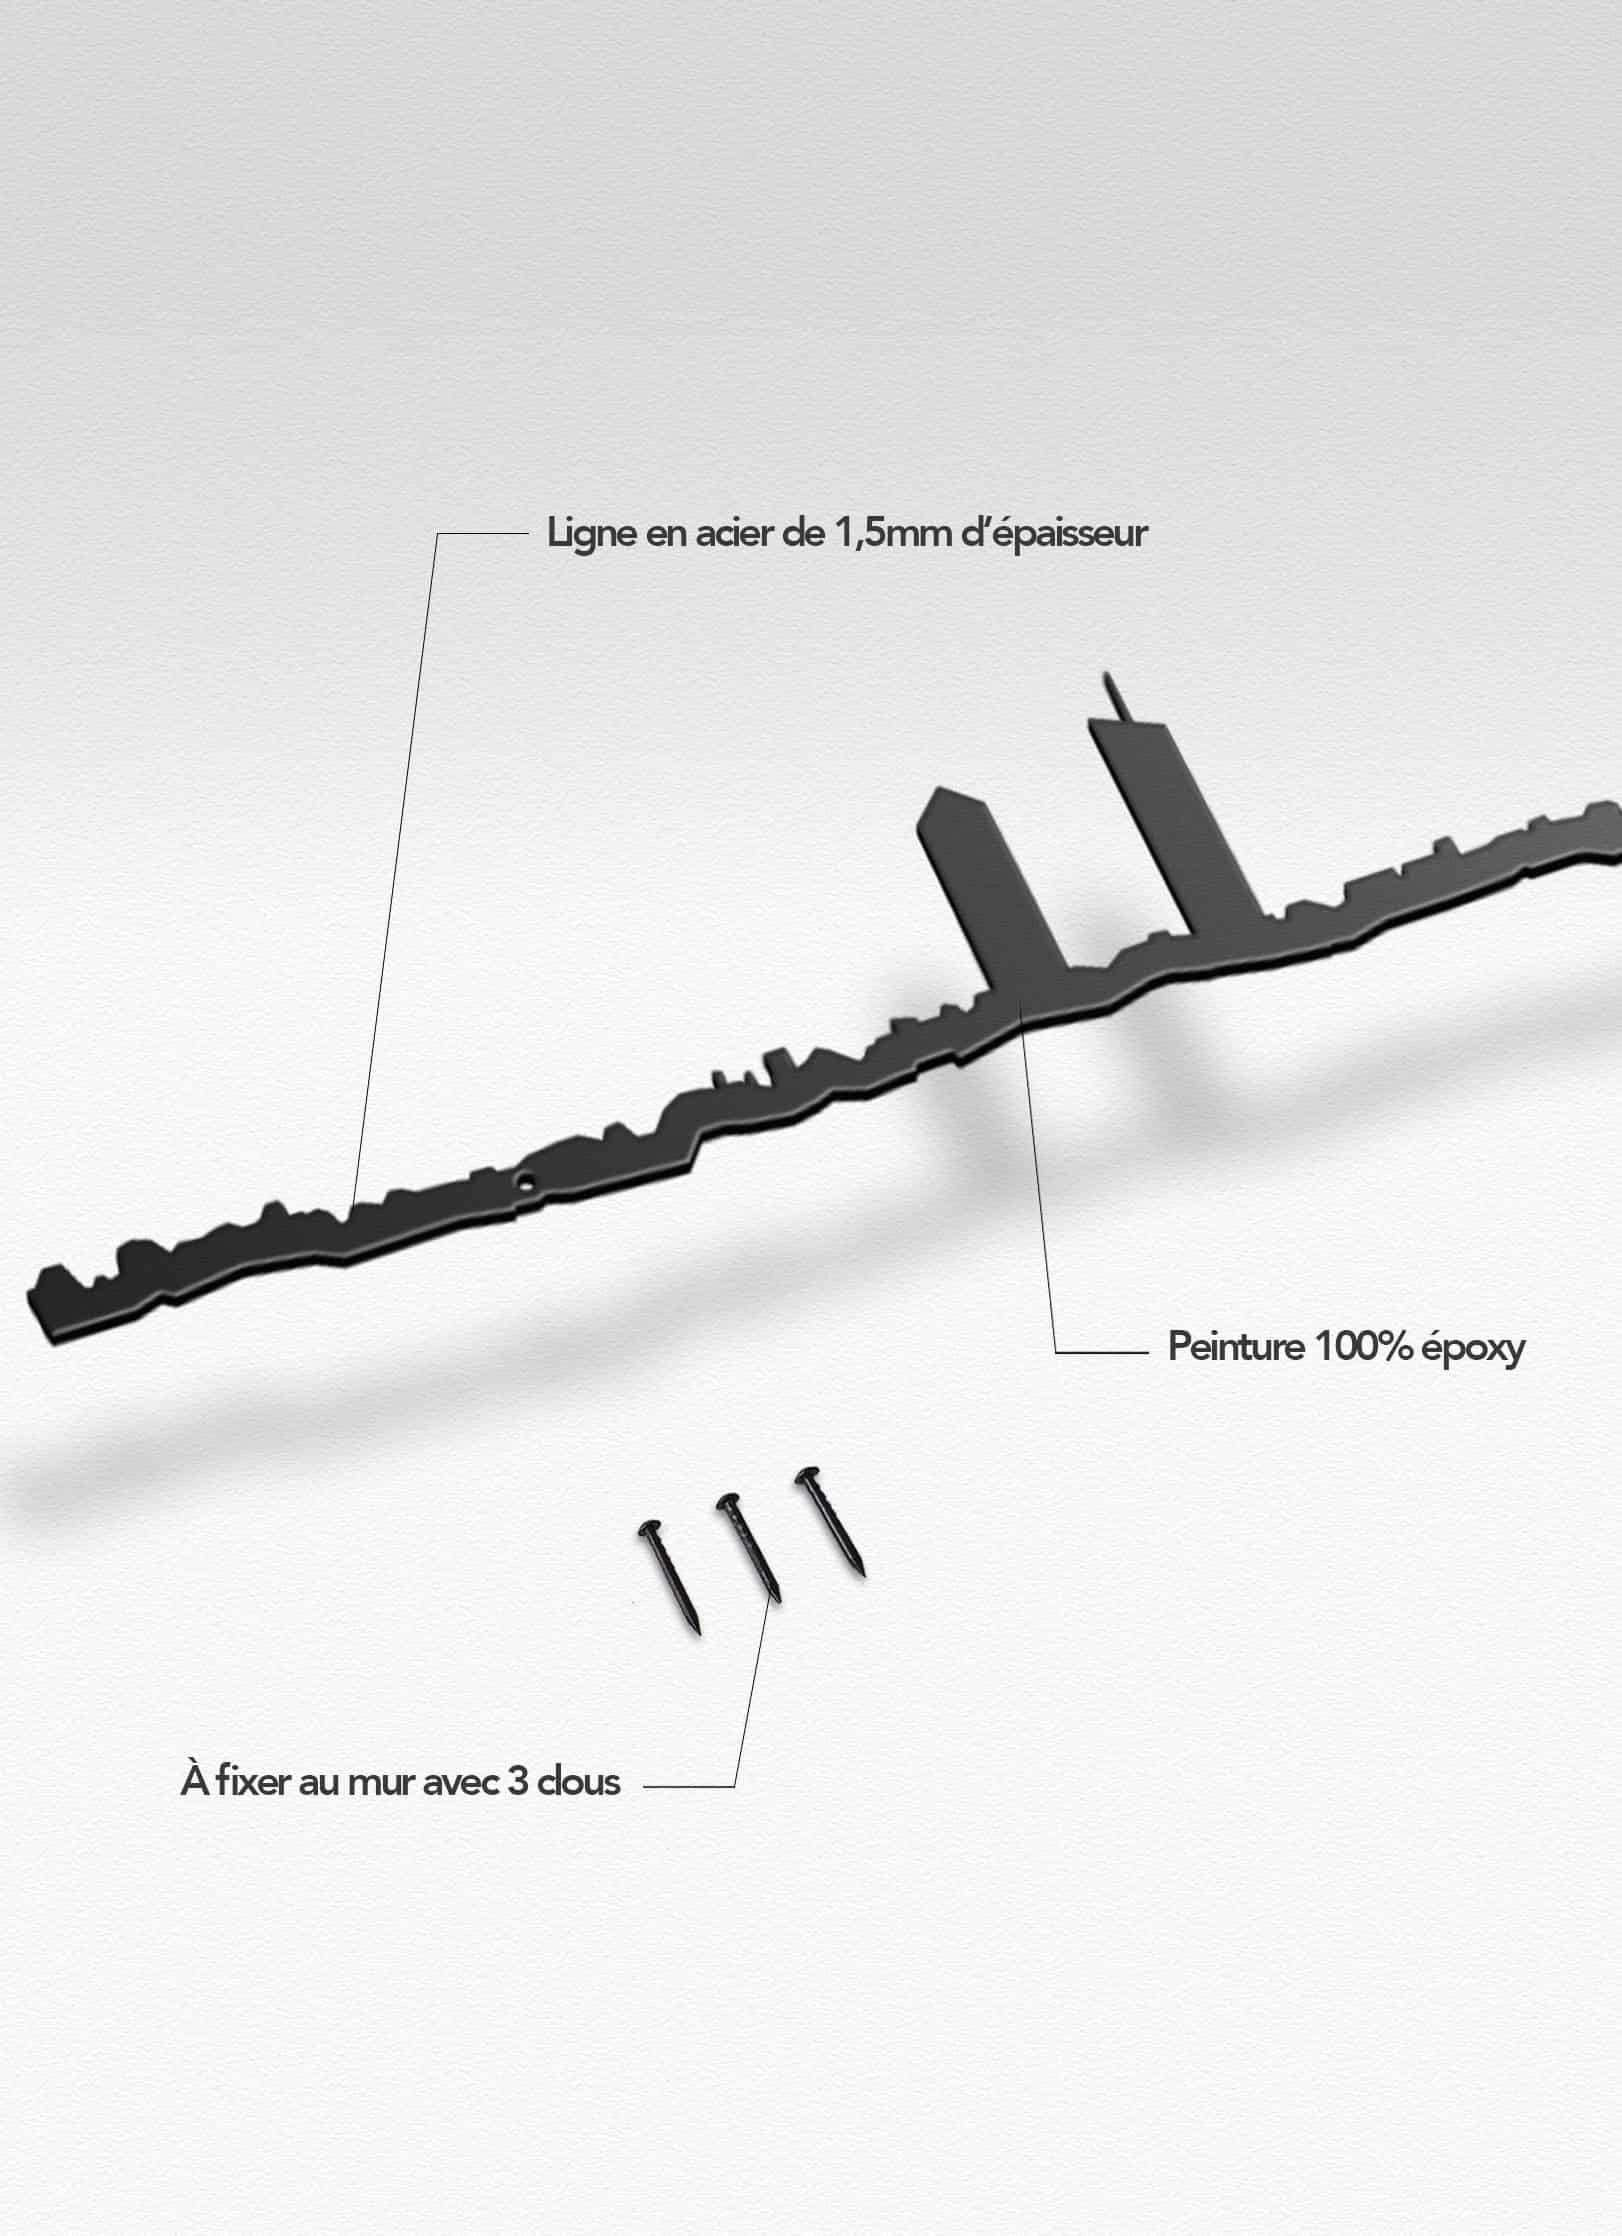 Presentation of the skyline of Lyon